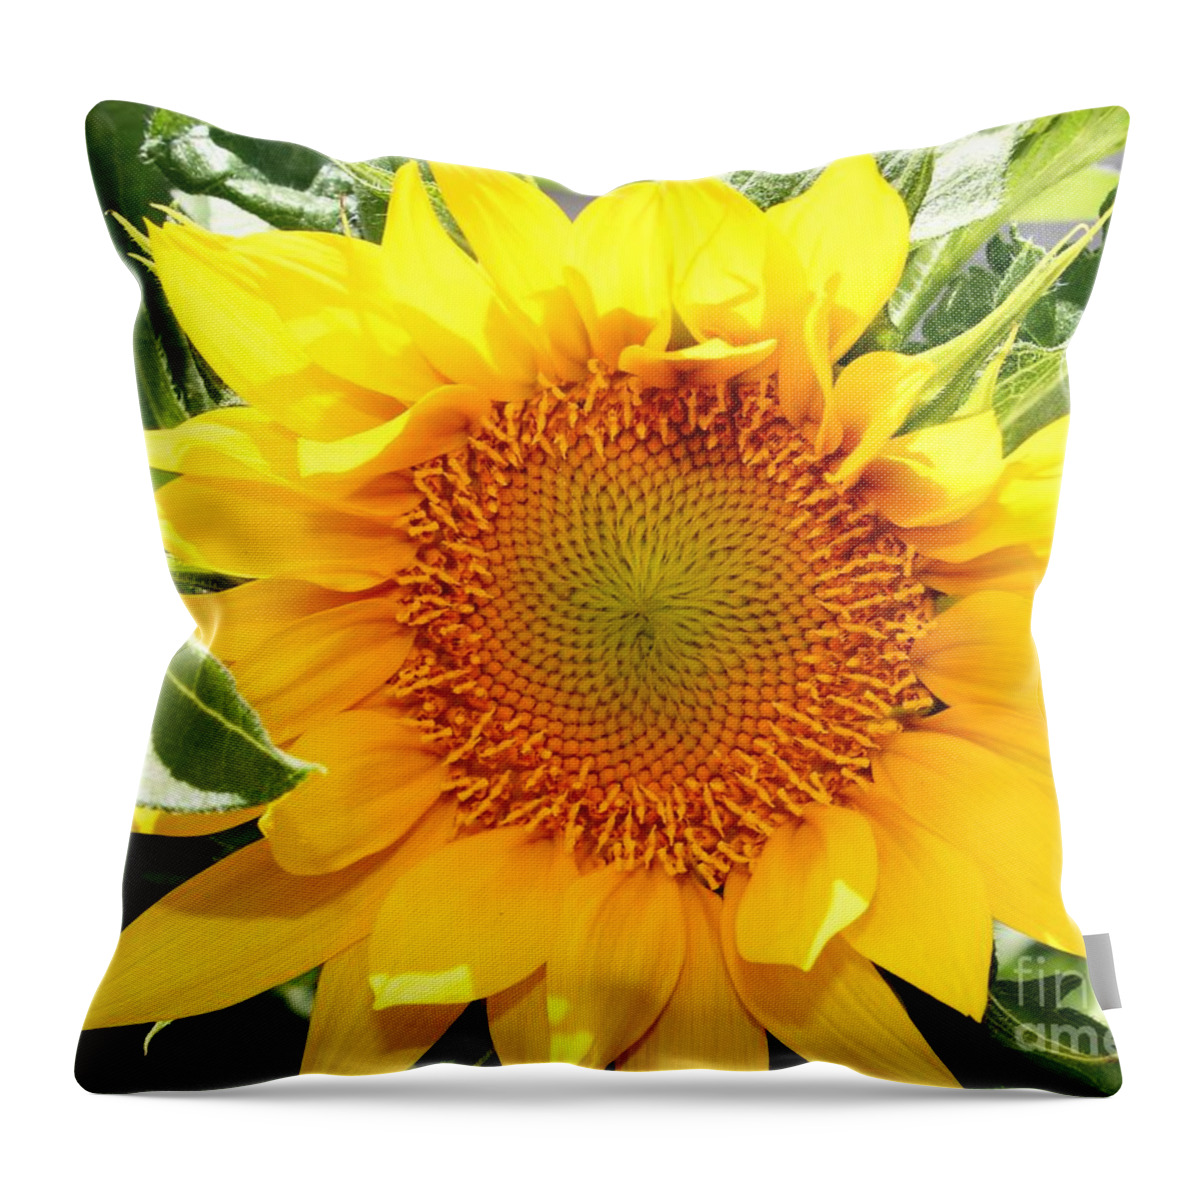 Sunflower Throw Pillow featuring the photograph Sunburst Of Yellow by Judy Palkimas